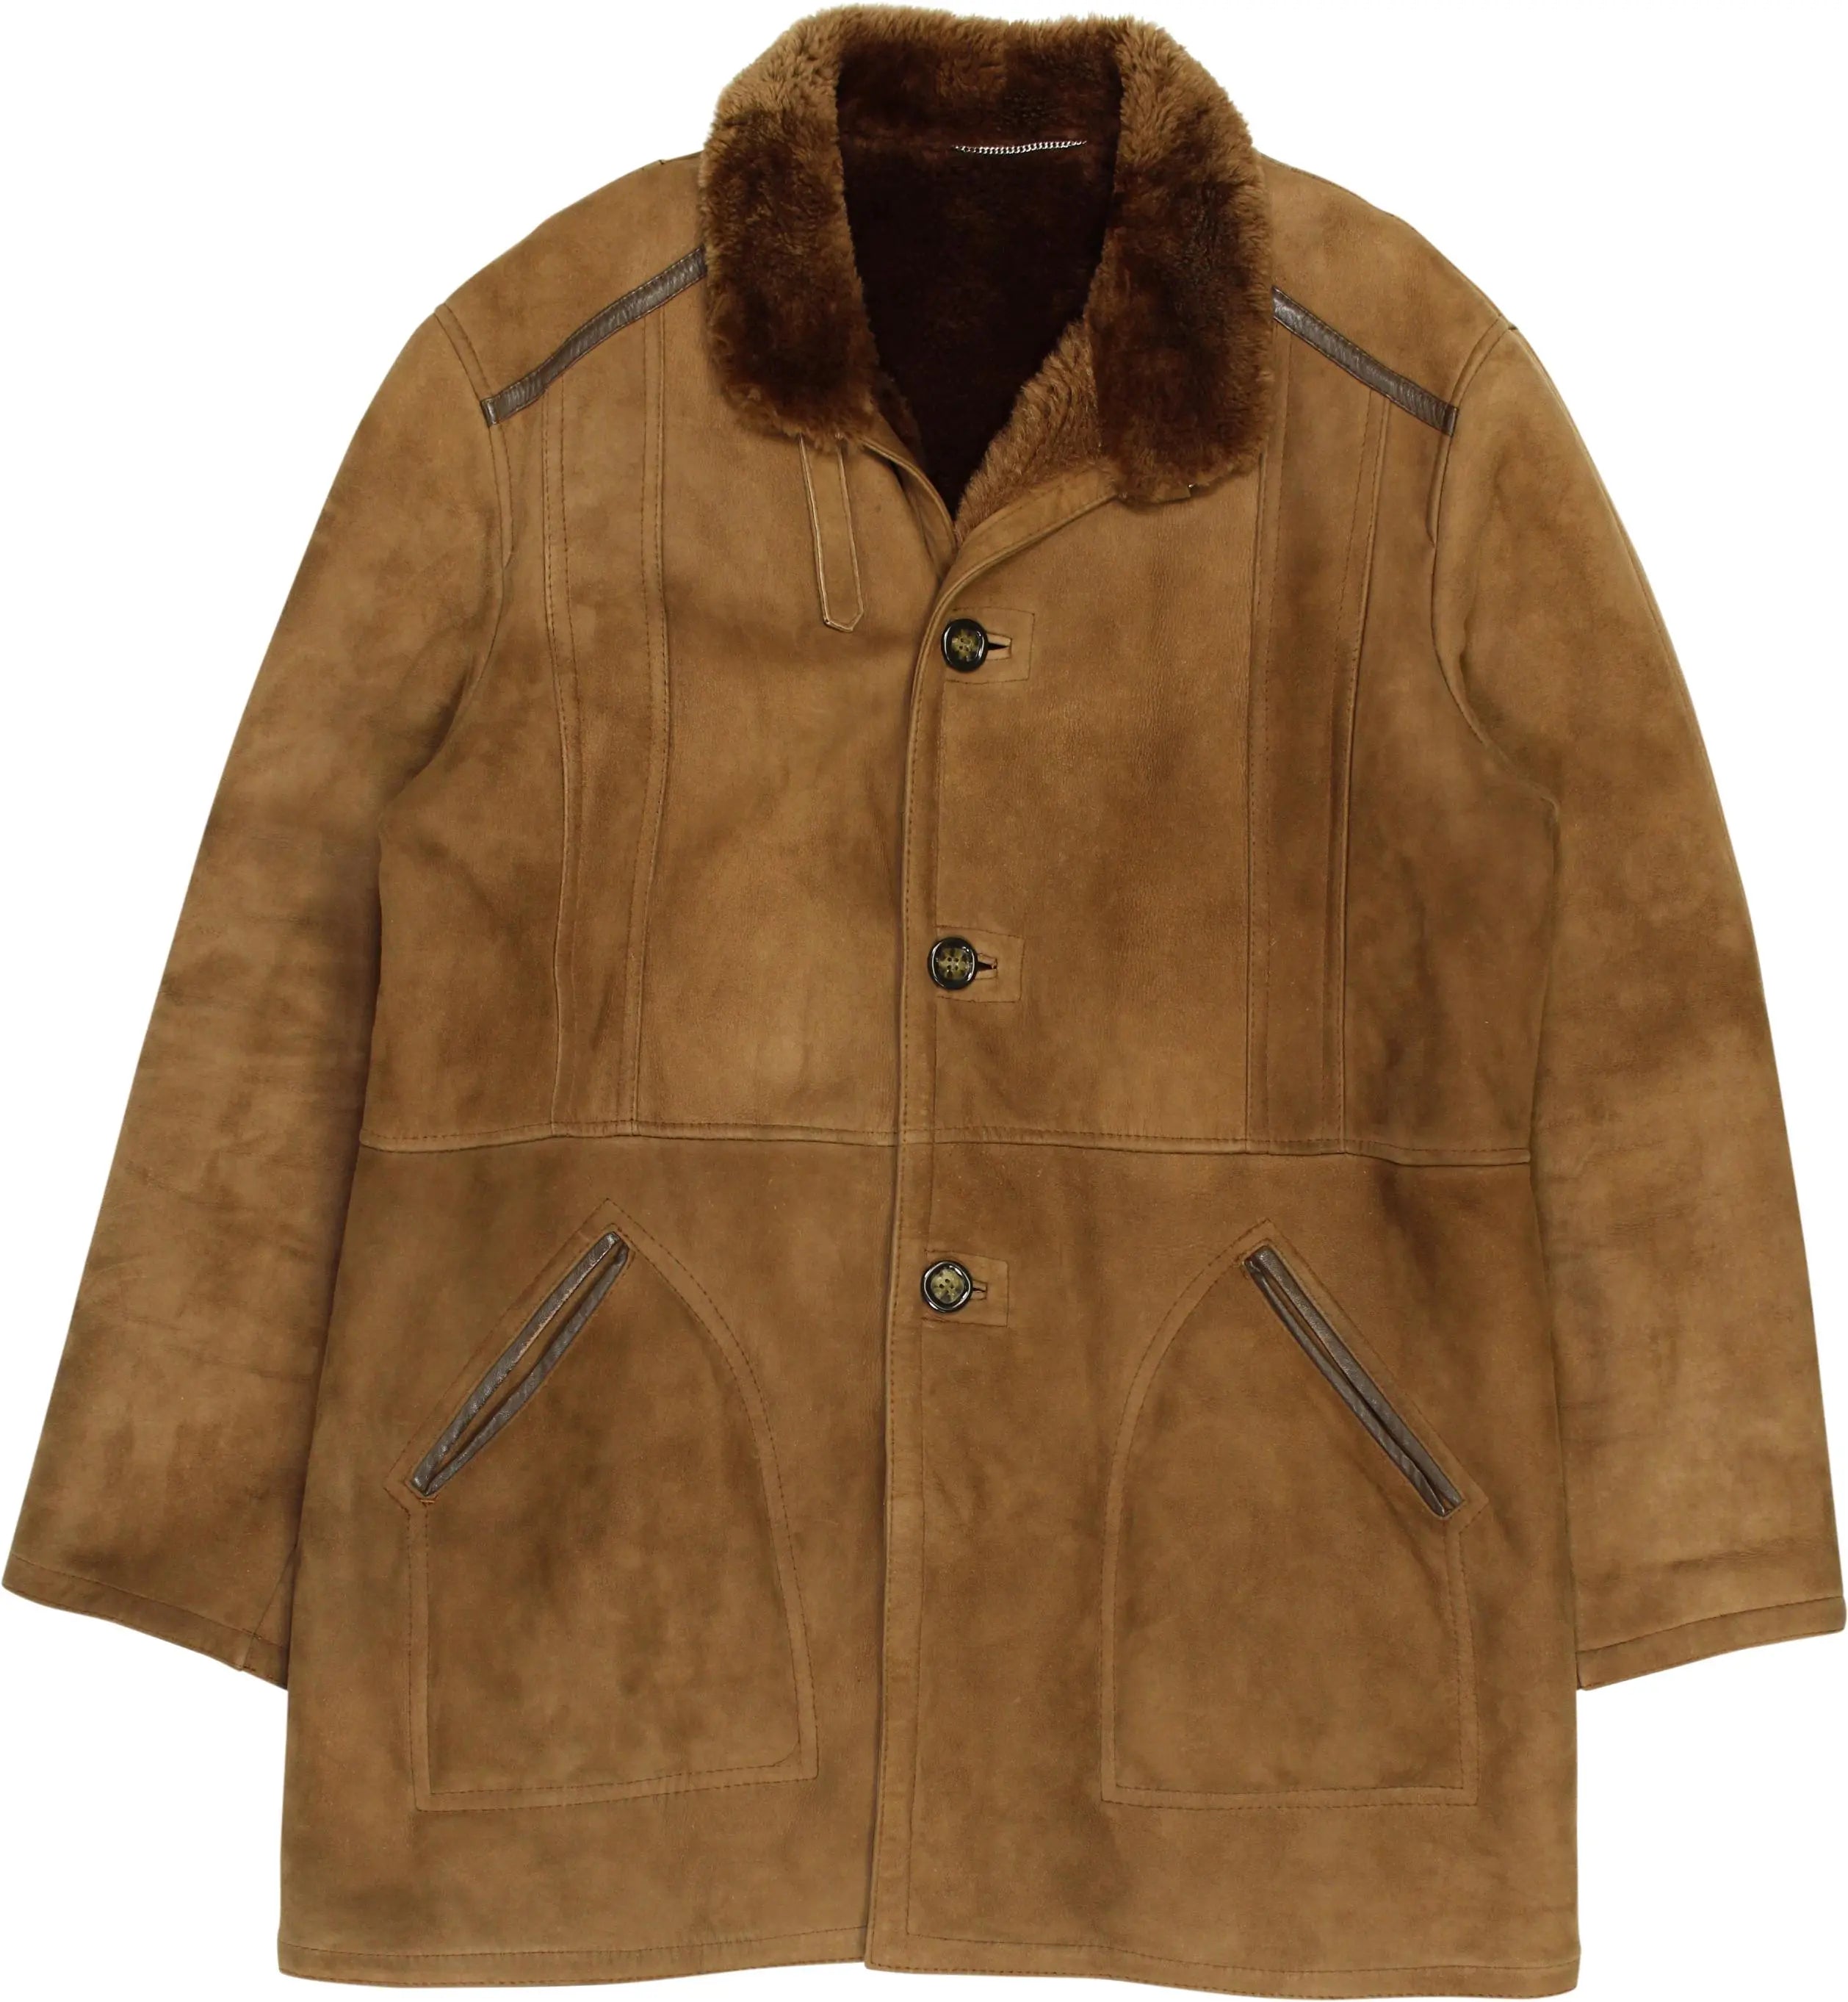 Men's Vintage Coats and Jackets